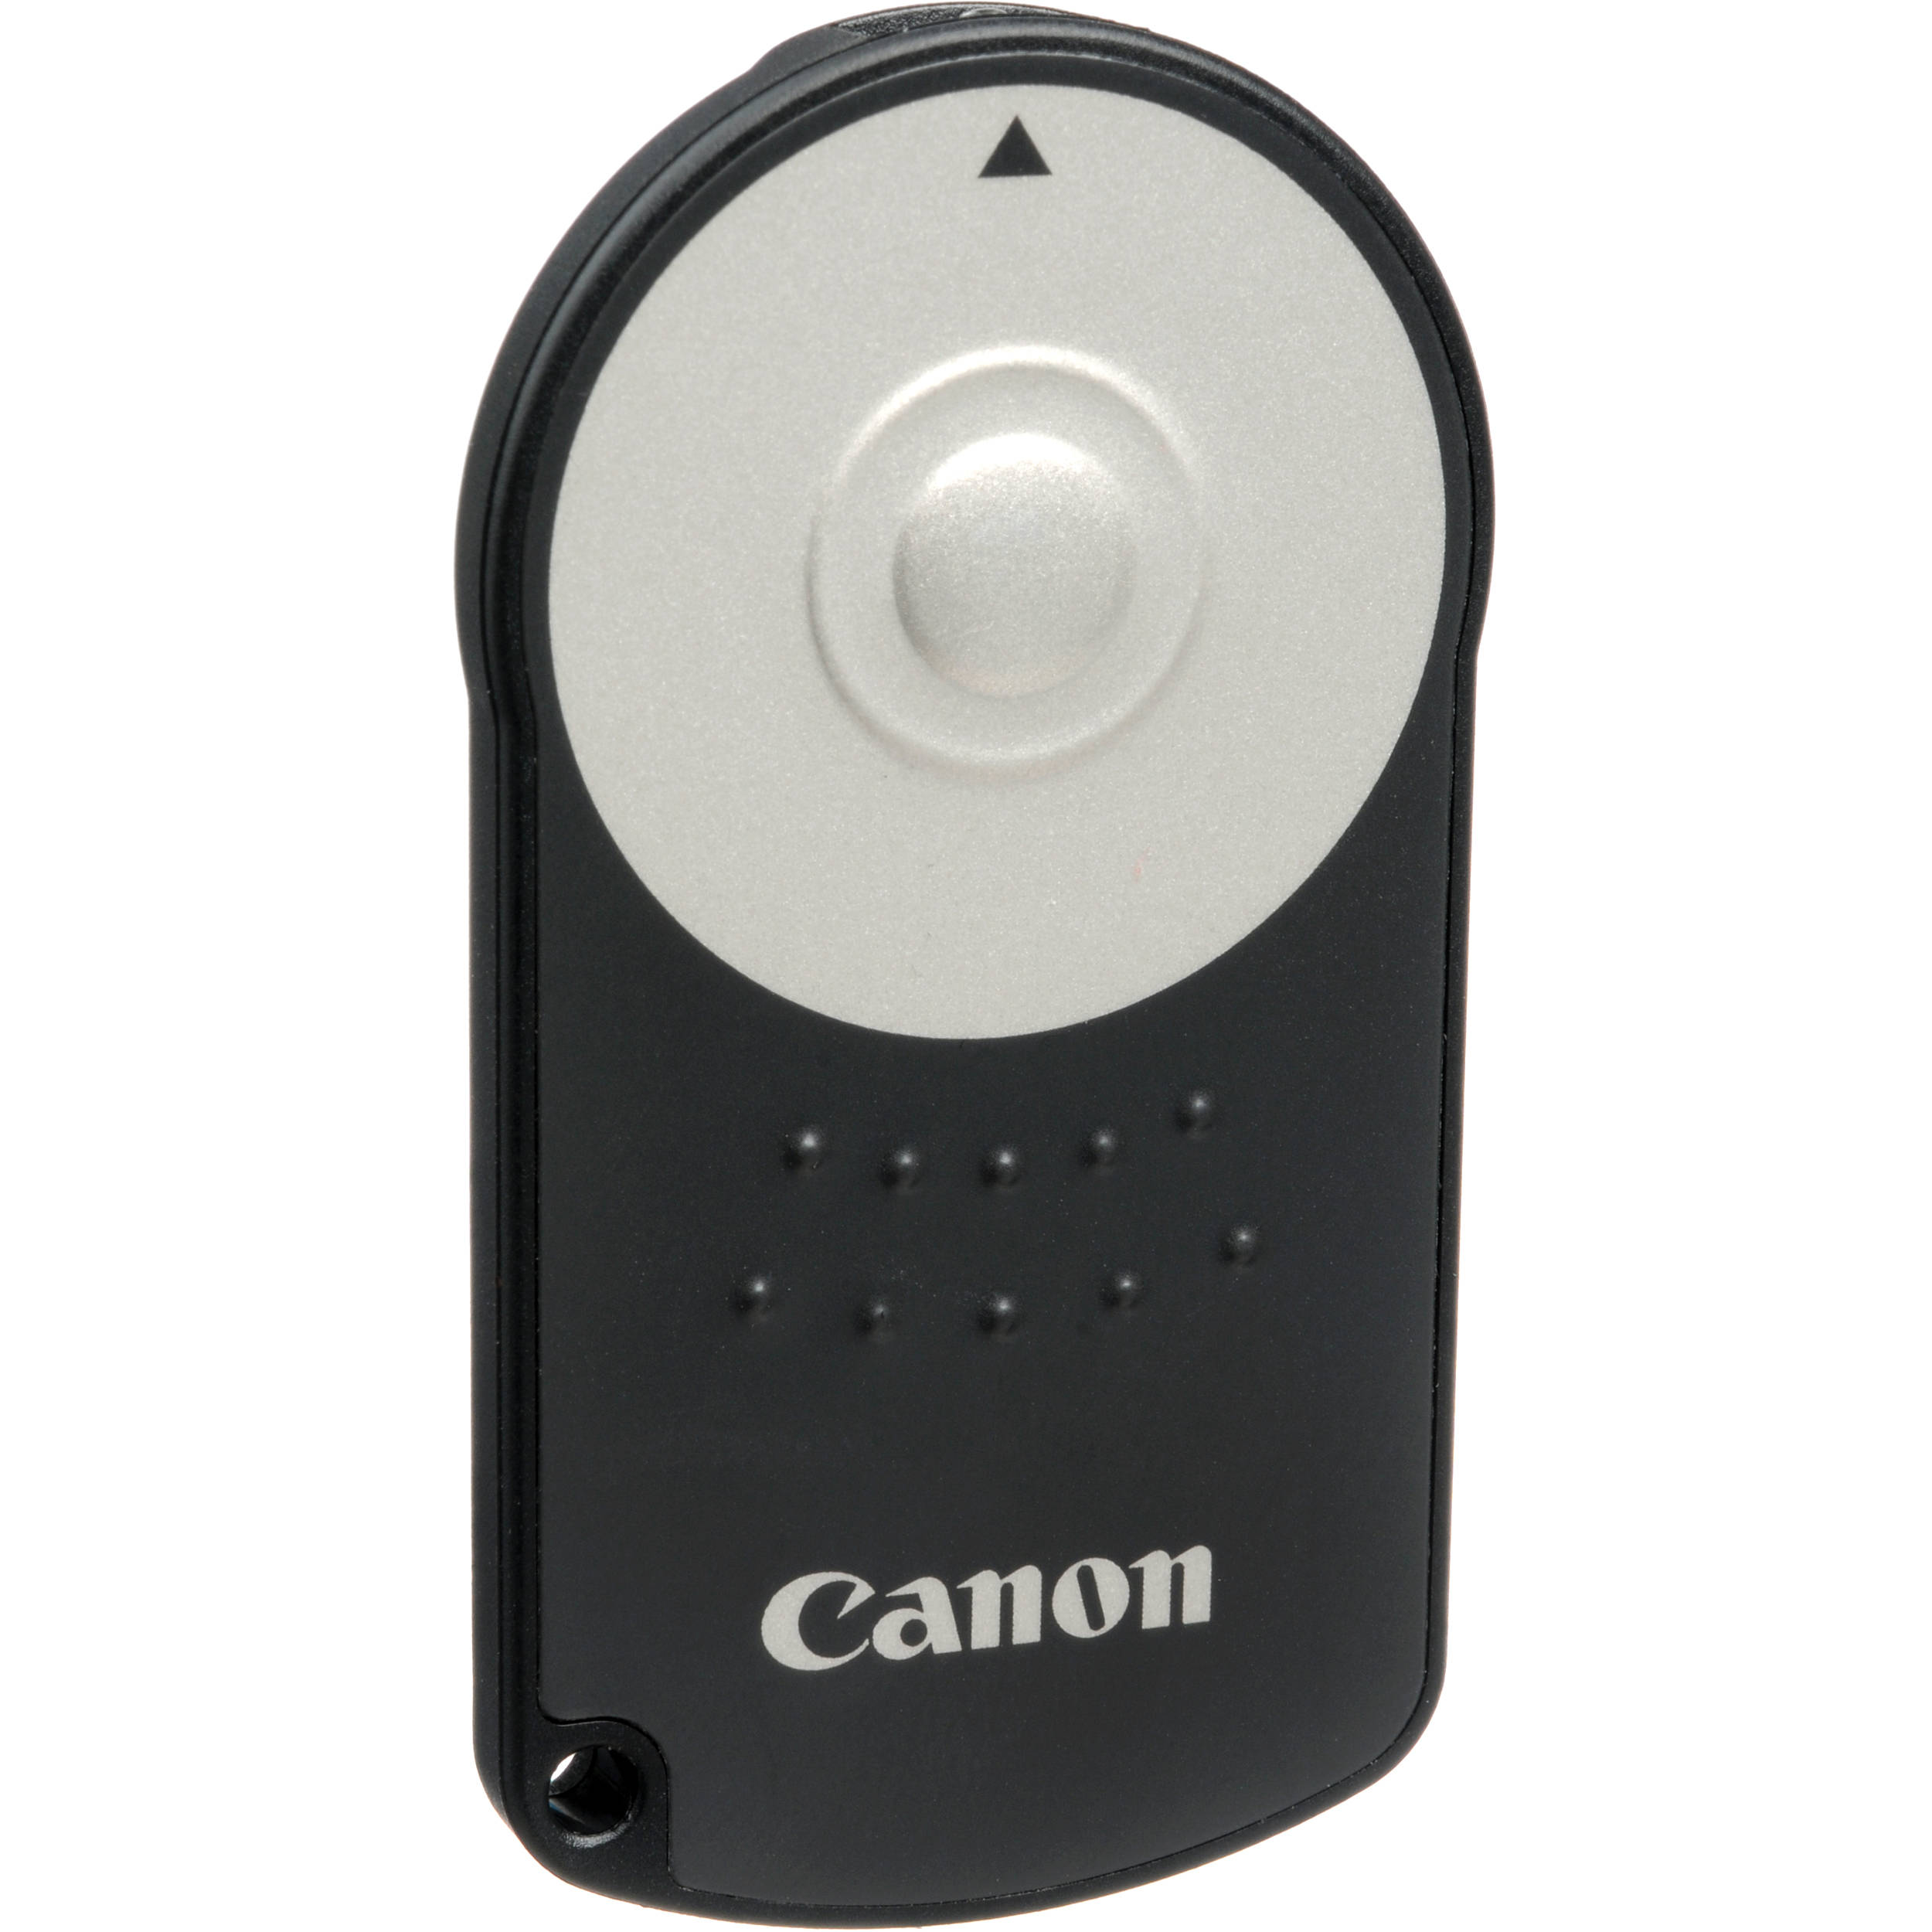 For Canon Remote Wireless RC-6 (Black) (not oringinal)